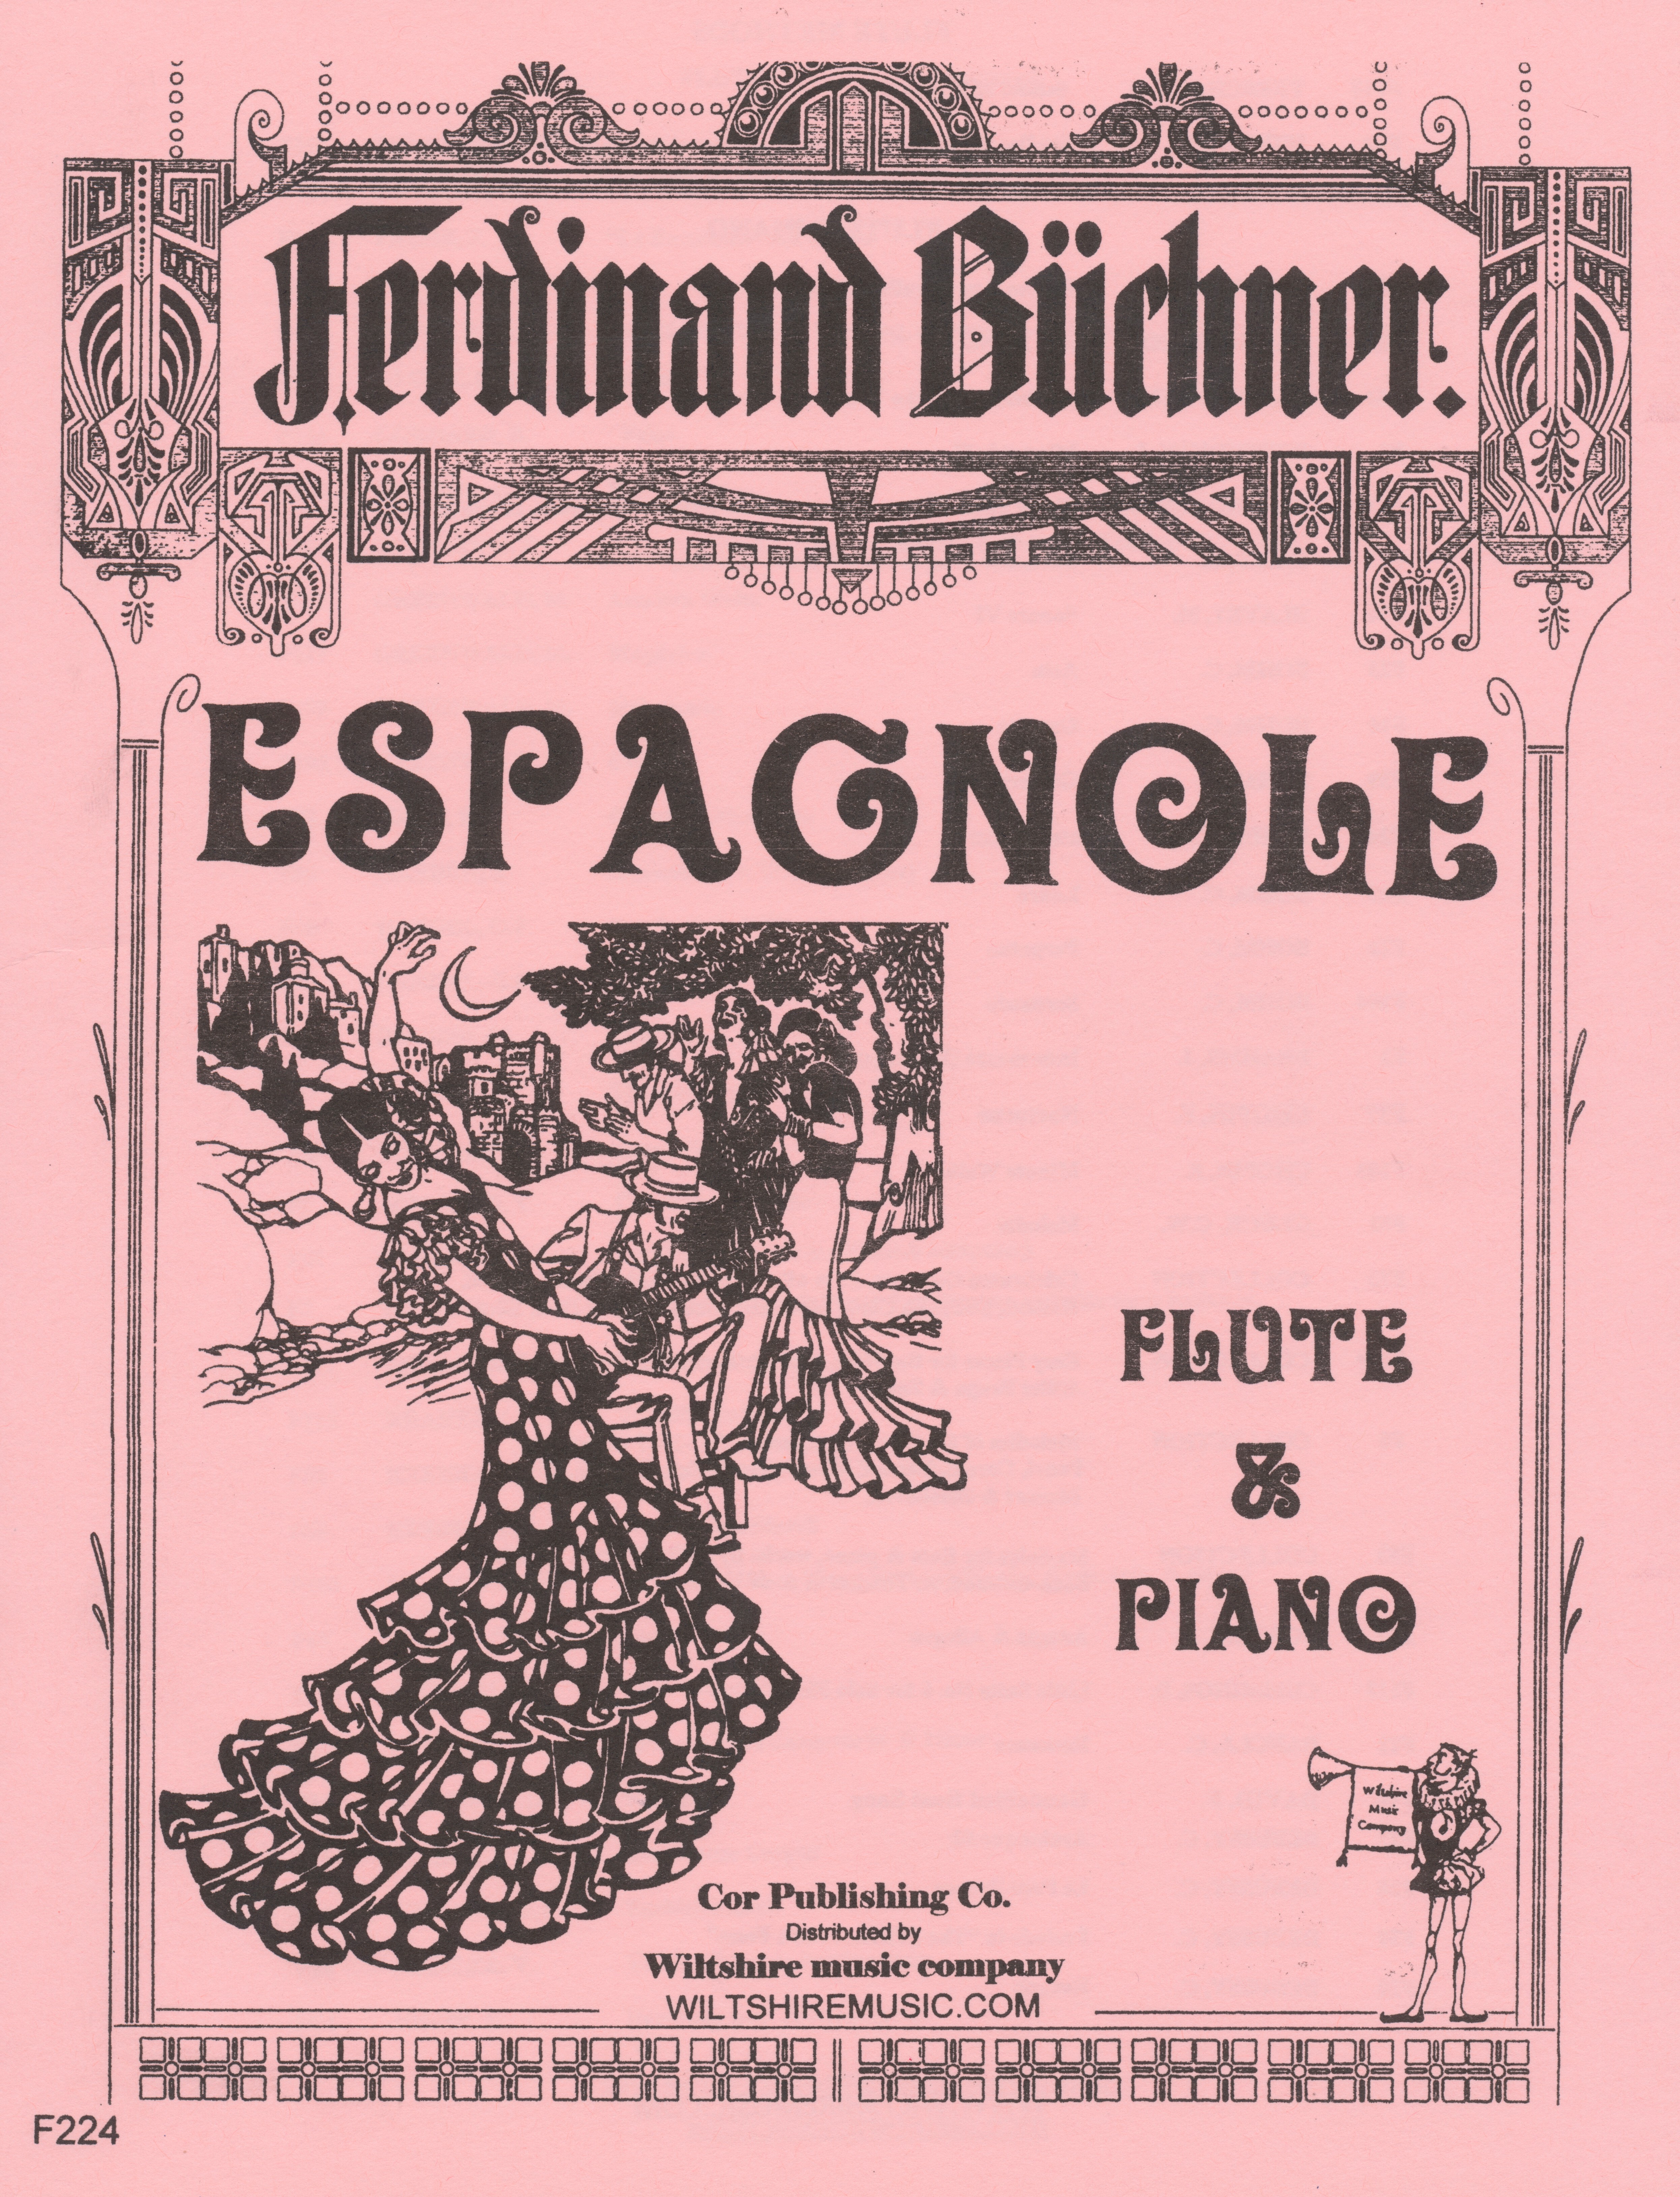 Espagnole, Ferdinand Buchner, flute & piano